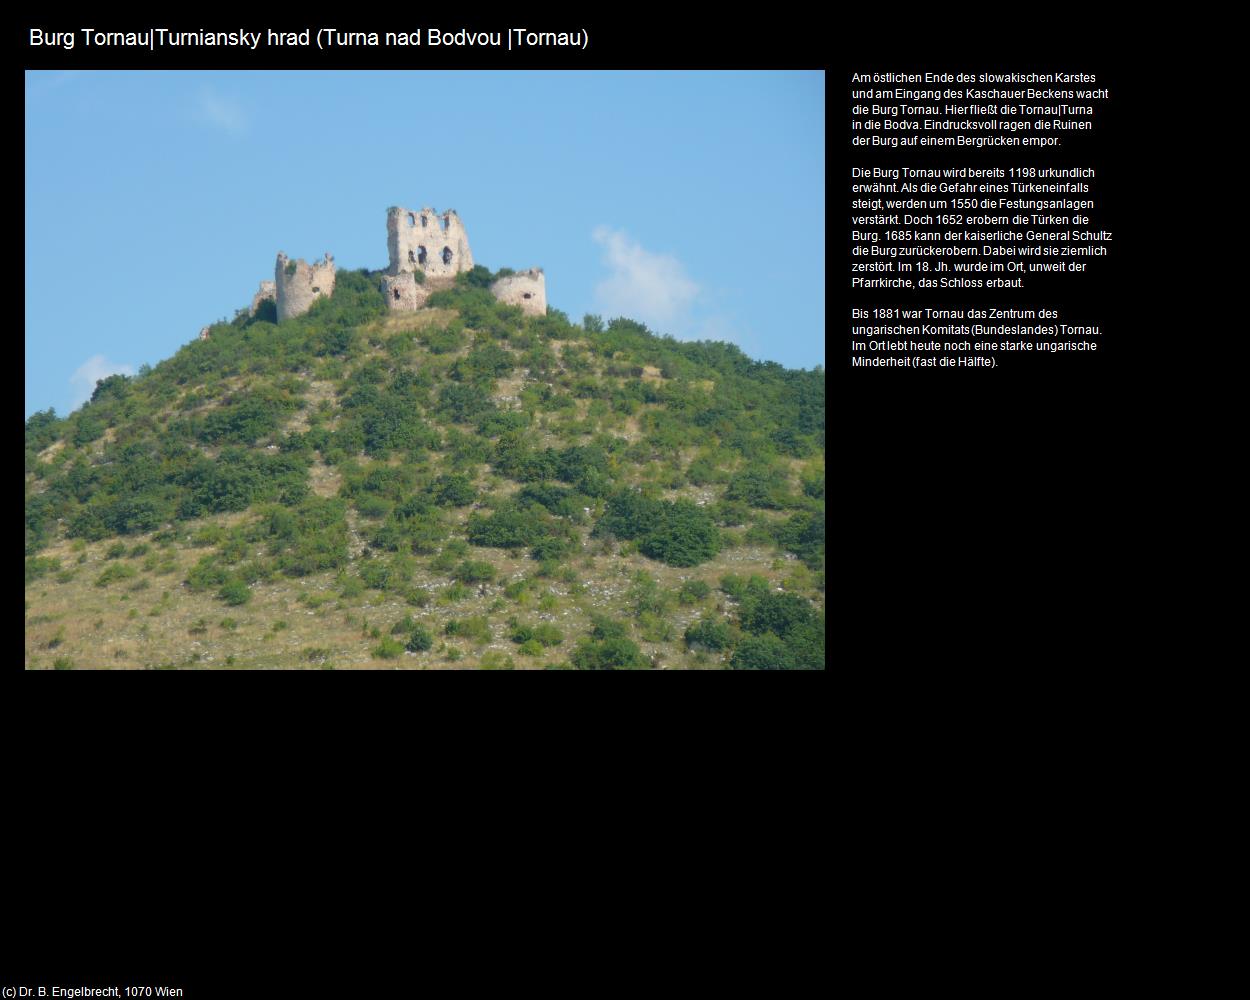 Burg Tornau (Turna nad Bodvou|Tornau) in SLOWAKEI